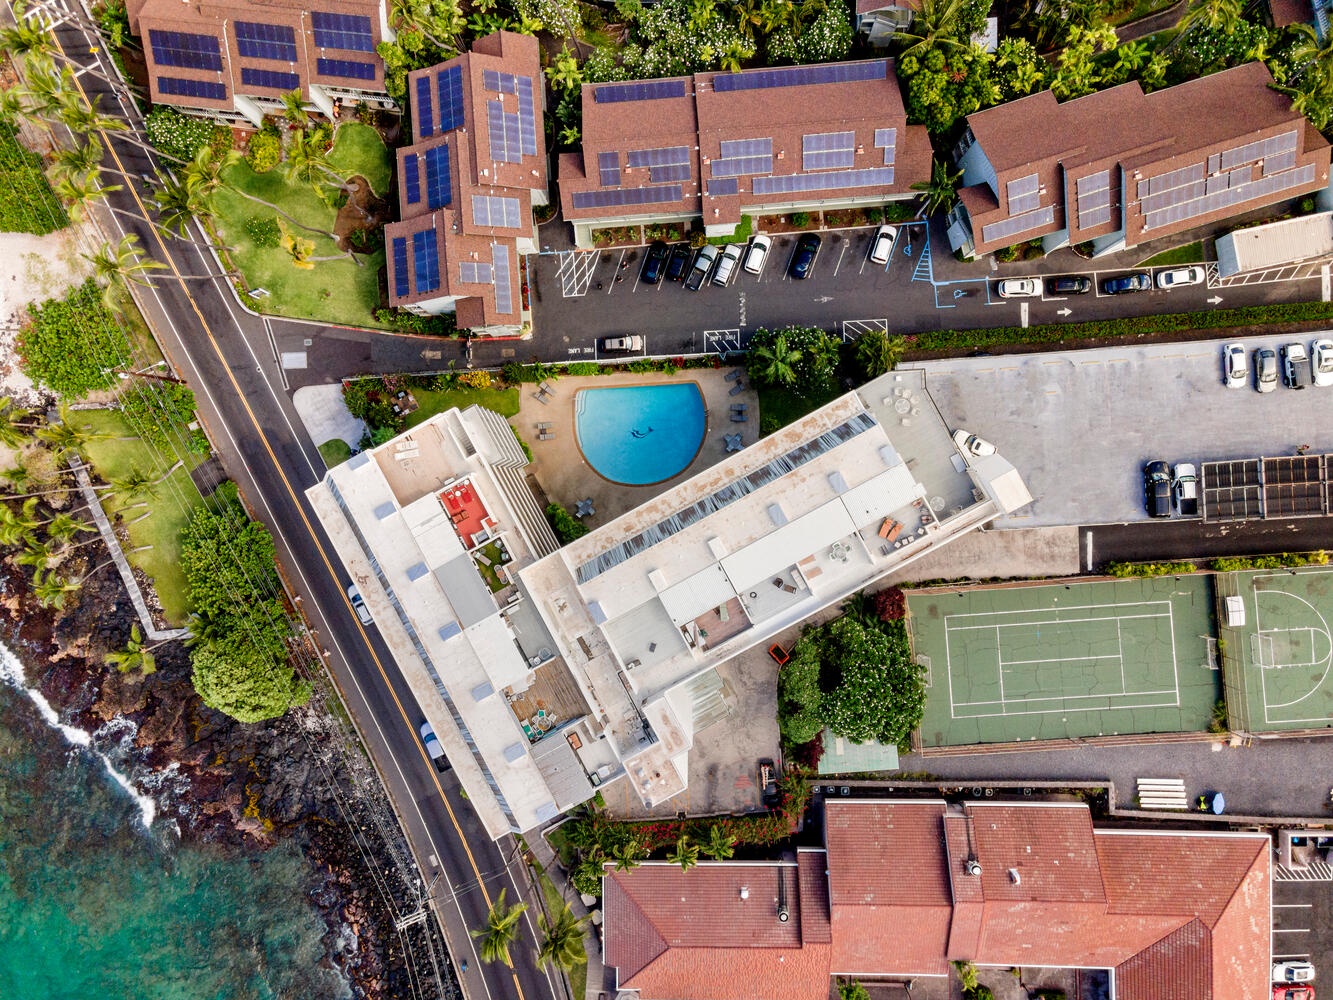 Kailua Kona Vacation Rentals, Kona Alii 403 - Aerial shot of the the complex.